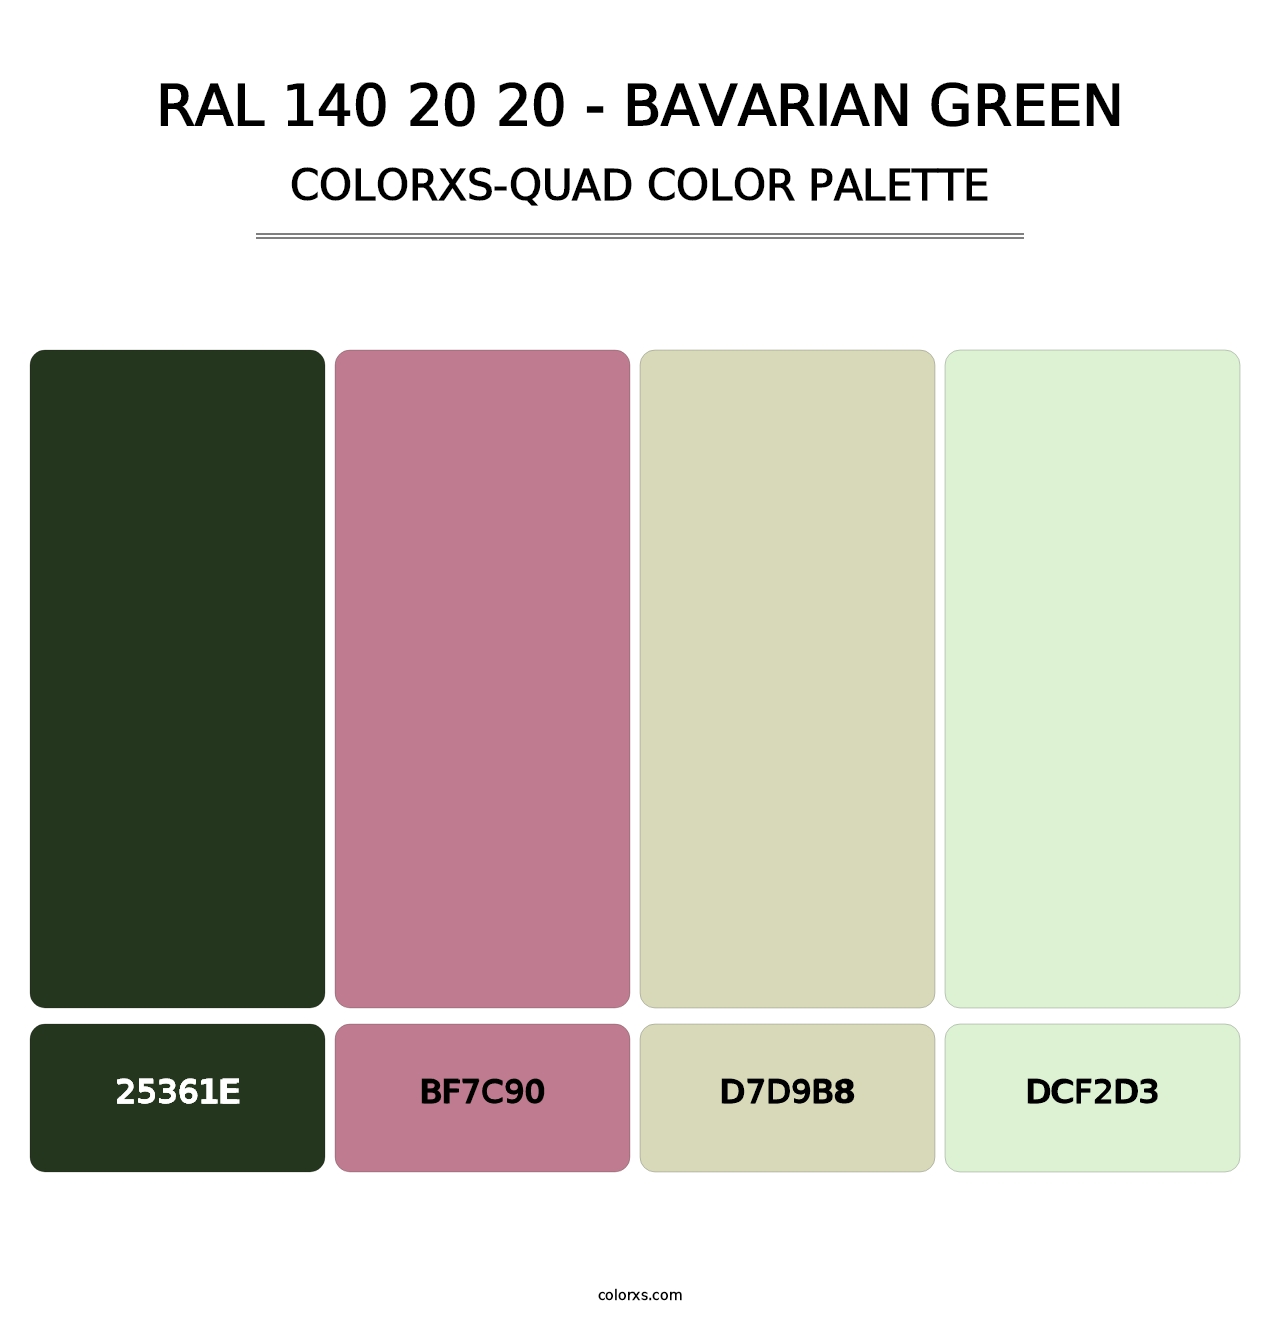 RAL 140 20 20 - Bavarian Green - Colorxs Quad Palette